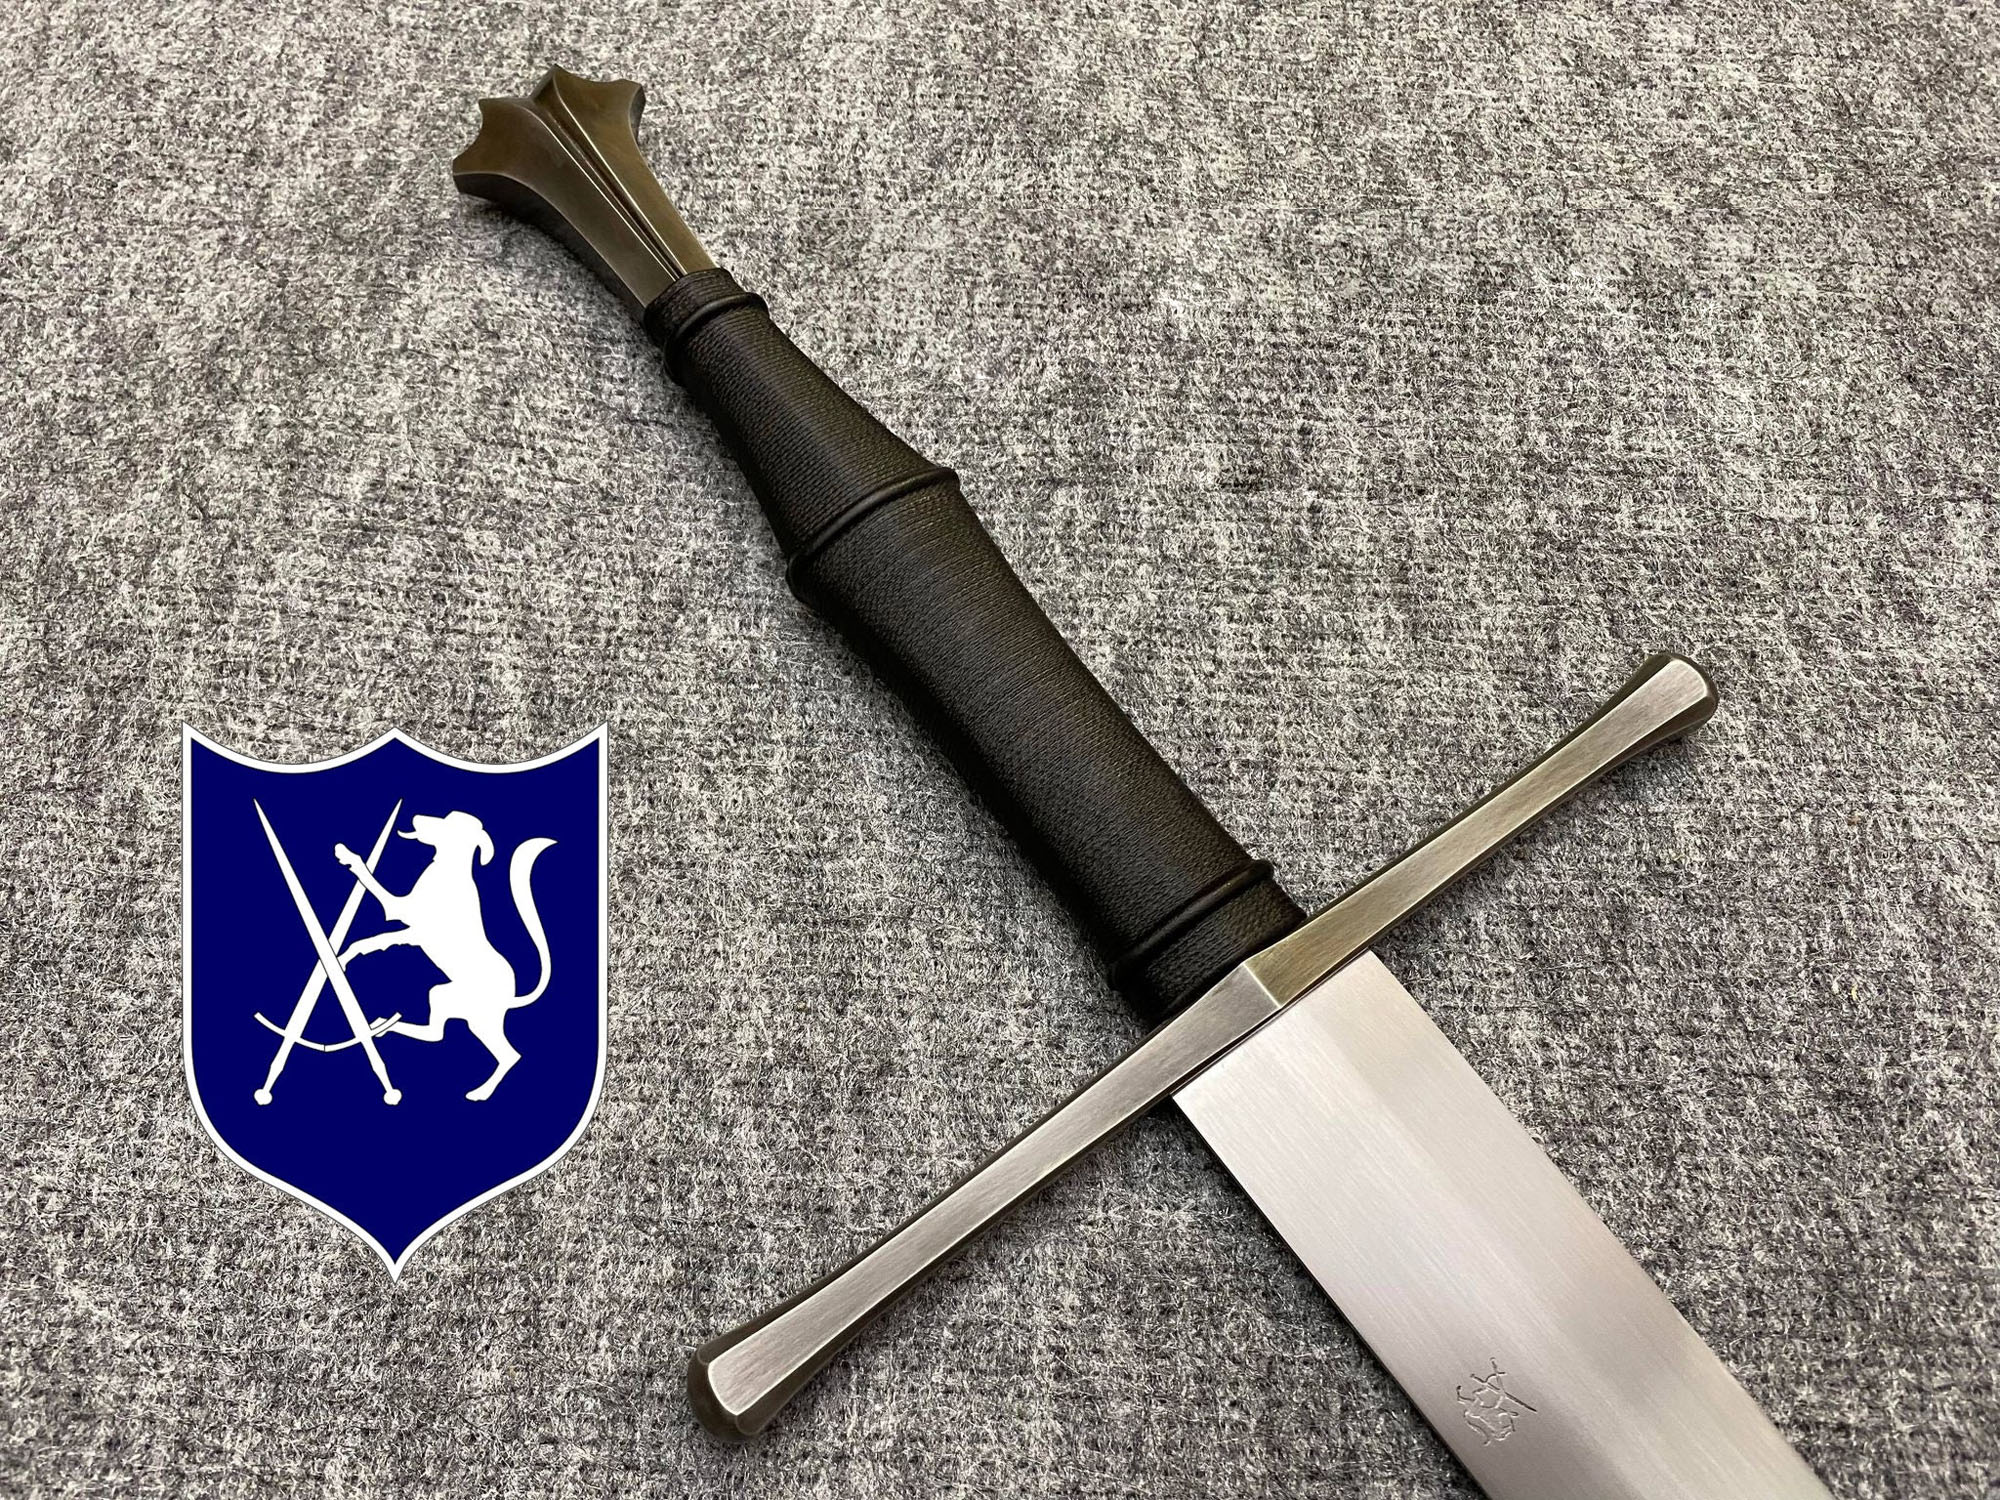 The Strasbourg Sword, handforged and sharp blade